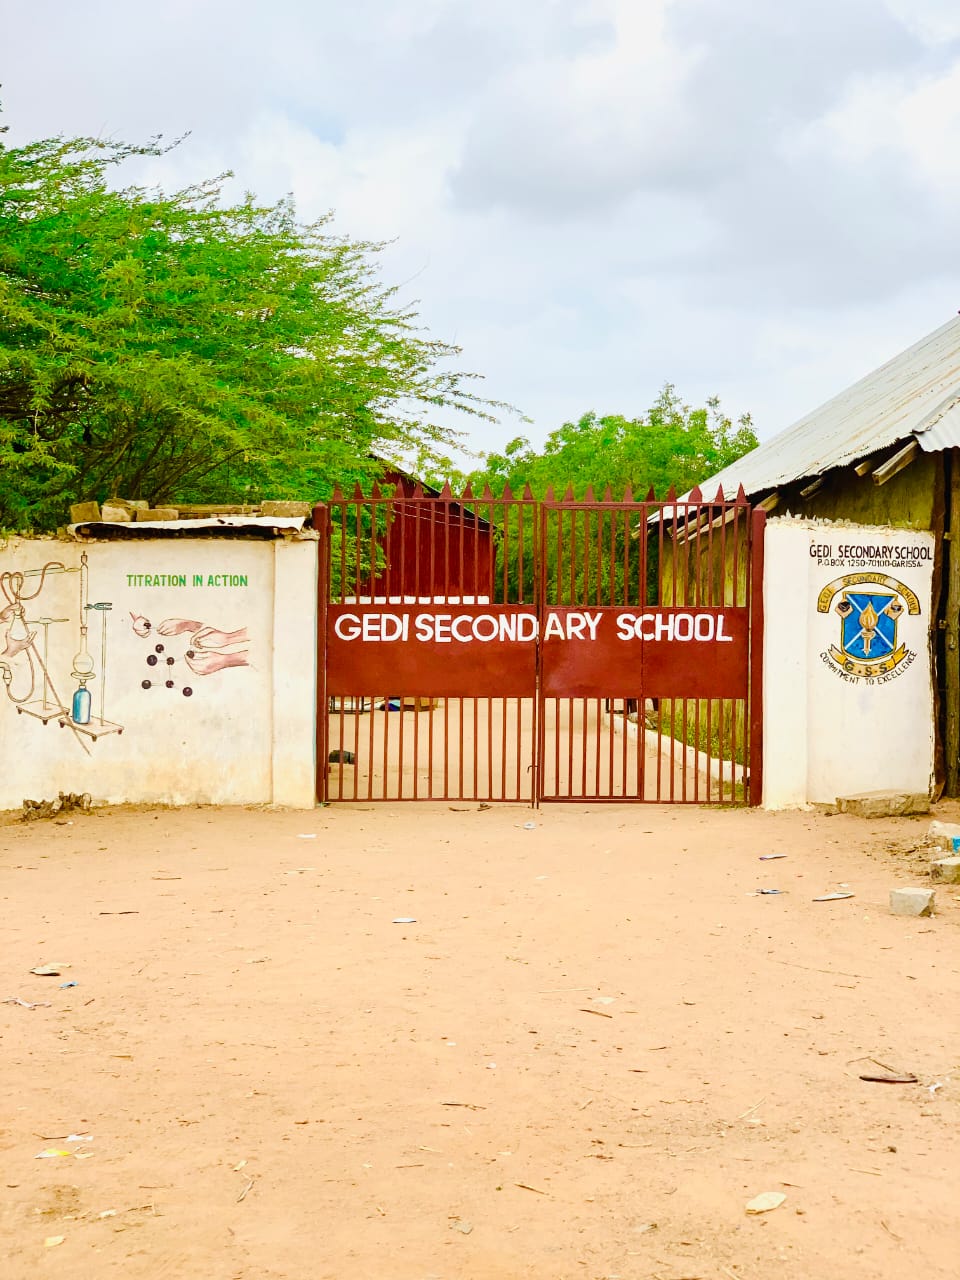 Gedi Secondary School